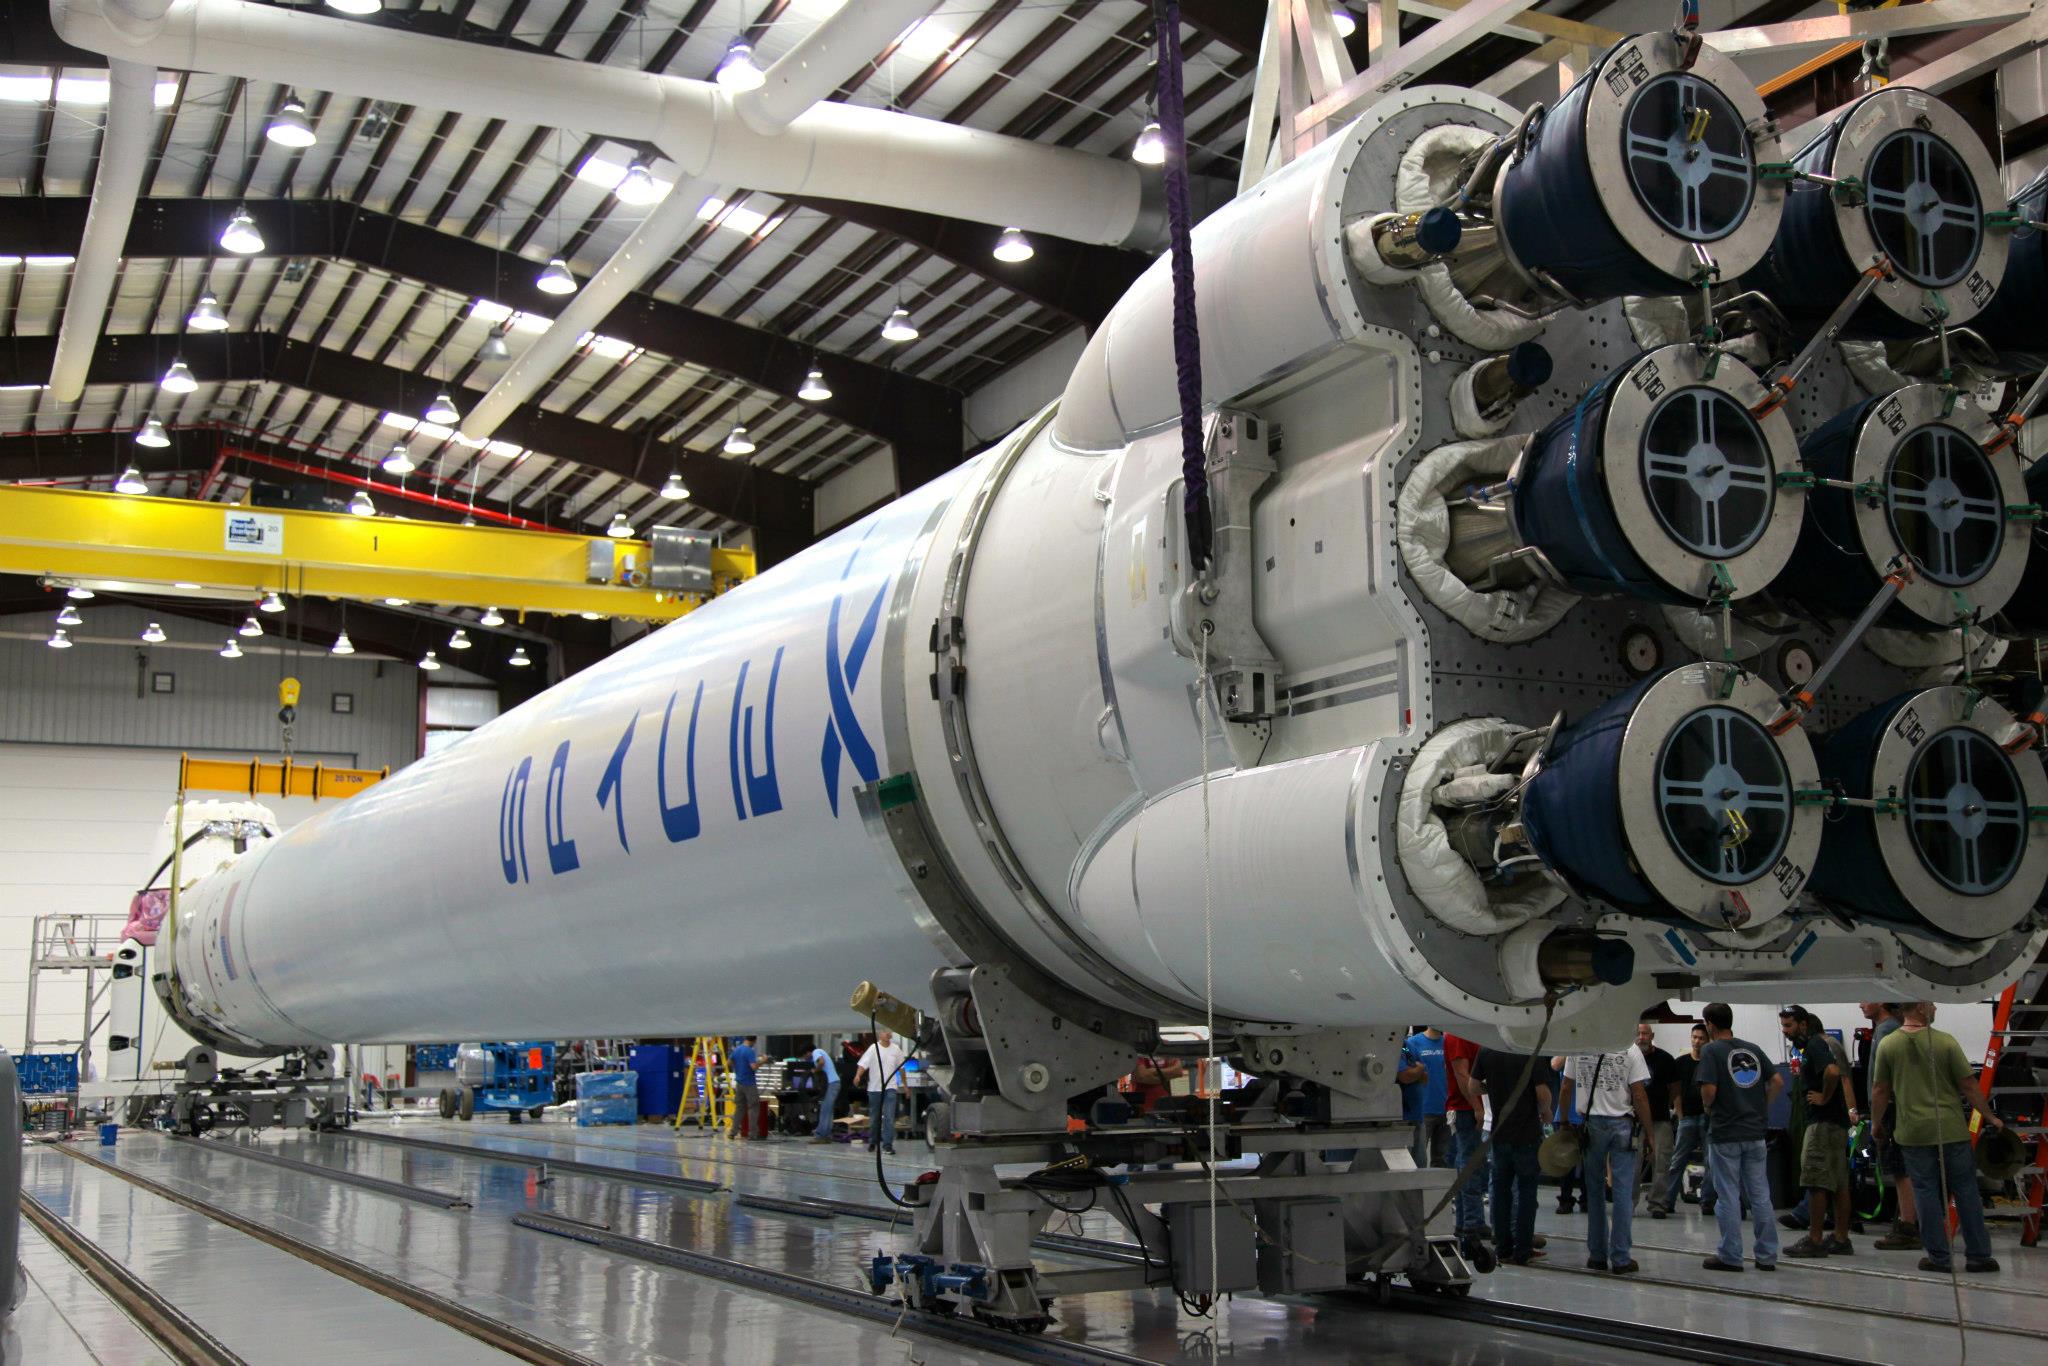 spacex-falcon-9-rocket-cape-canaveral-air-force-station-photo-credit-spacex-posted-on-americaspace В этом году на Марс отправят первую частную ракету